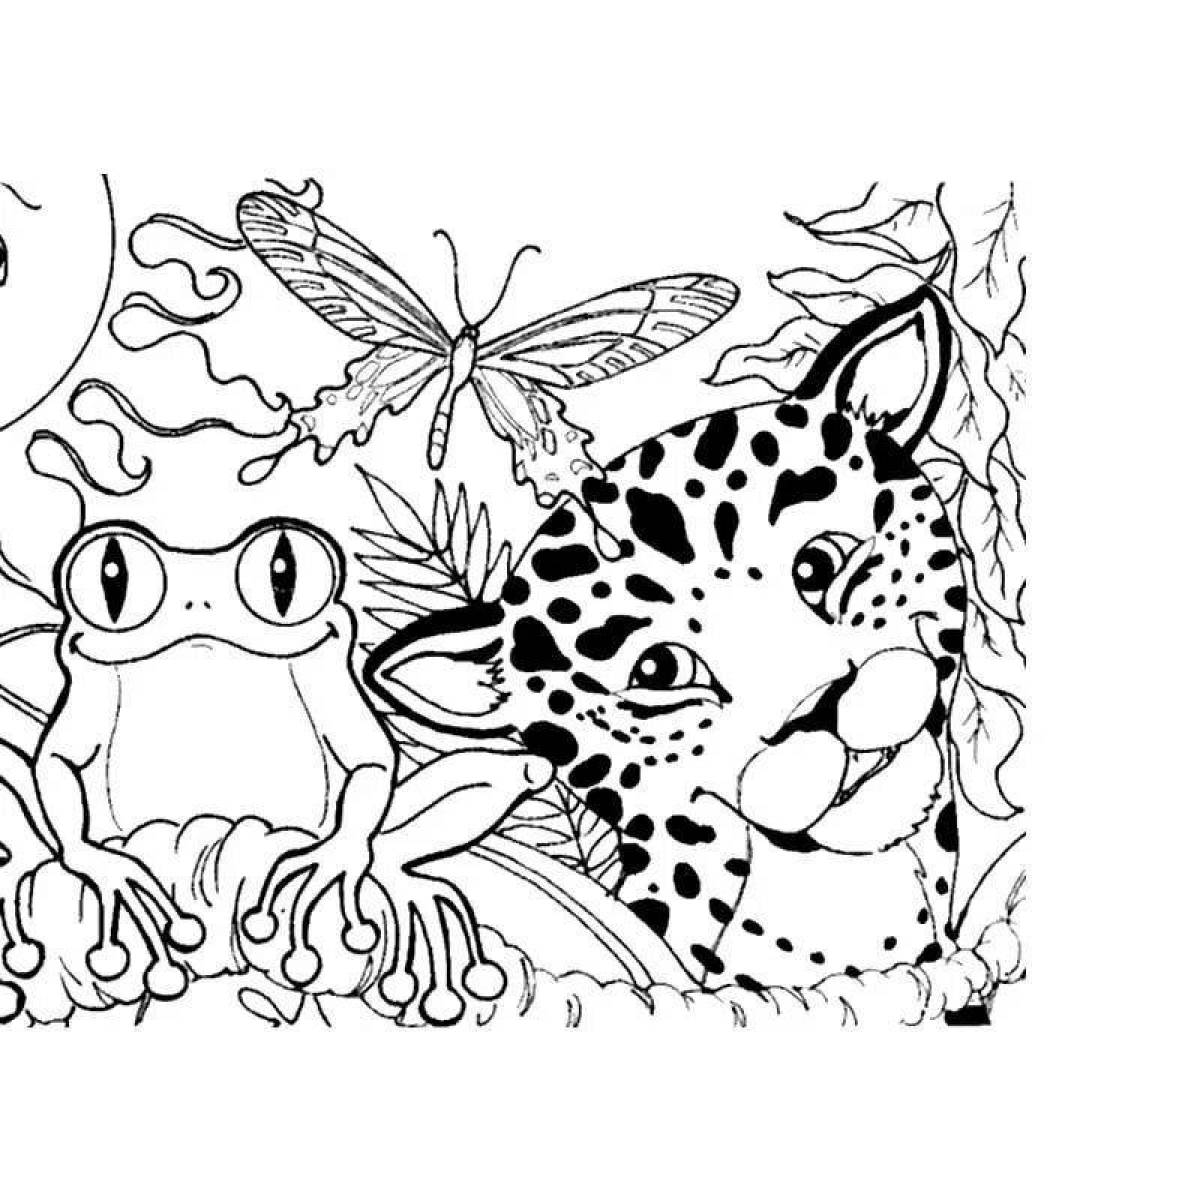 Fabulous jungle animals coloring book